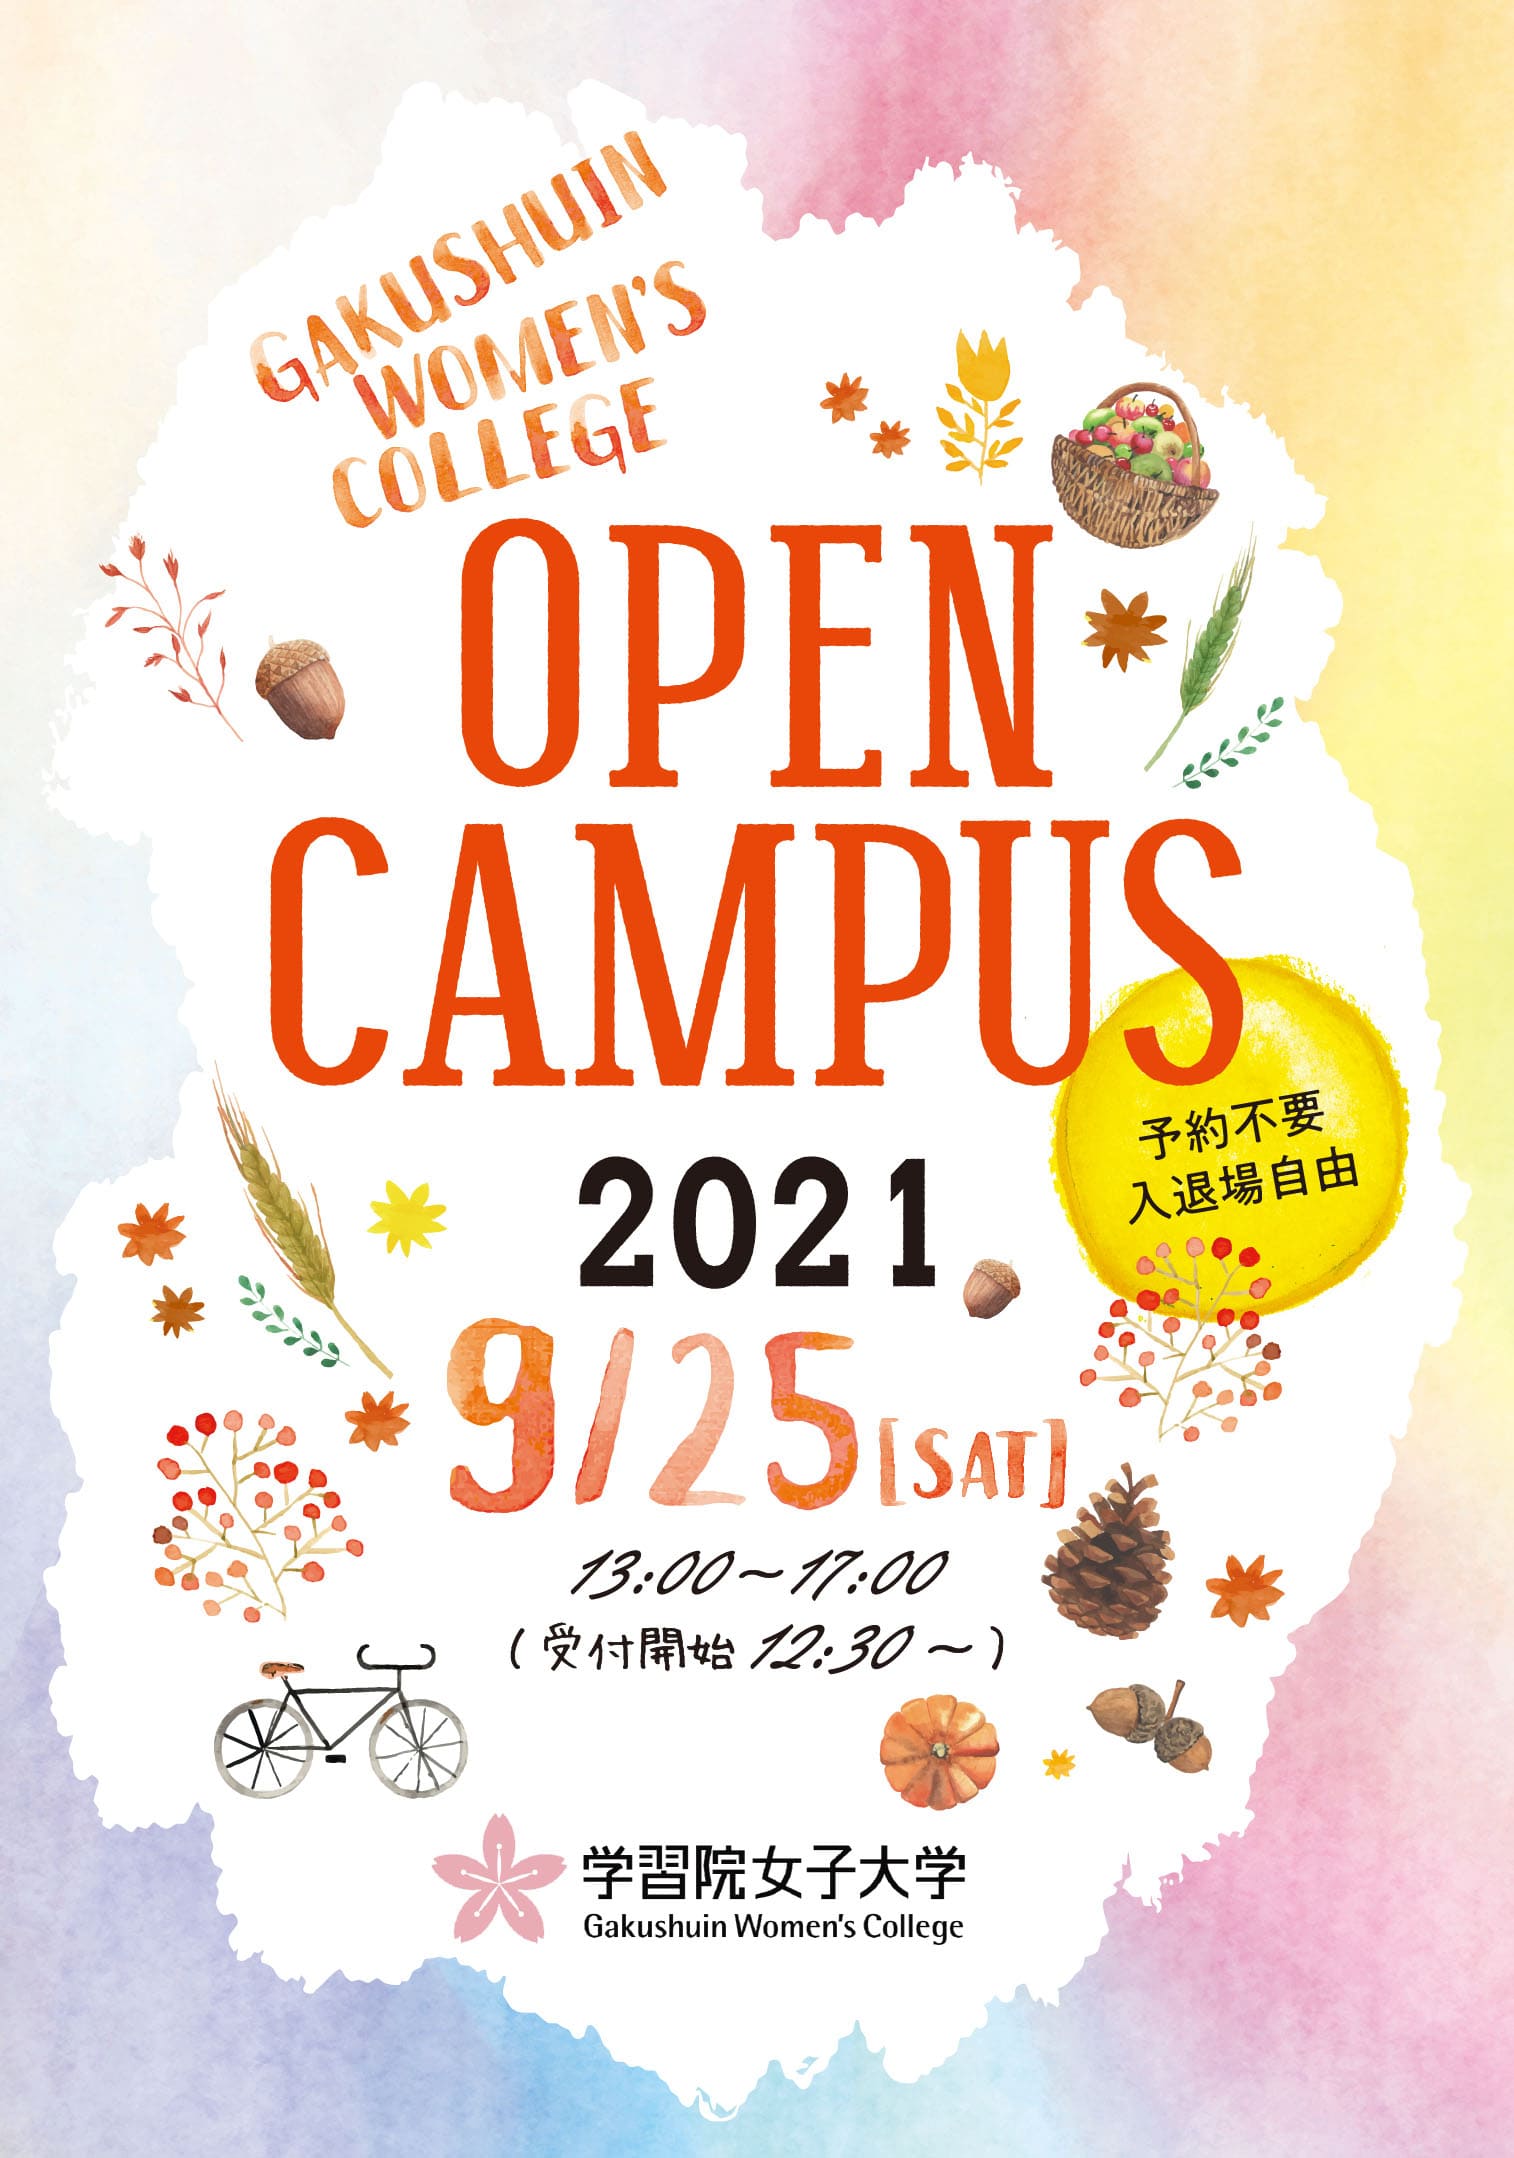 OPEN CAMPUS 2021 9/25(SAT) 学習院女子大学